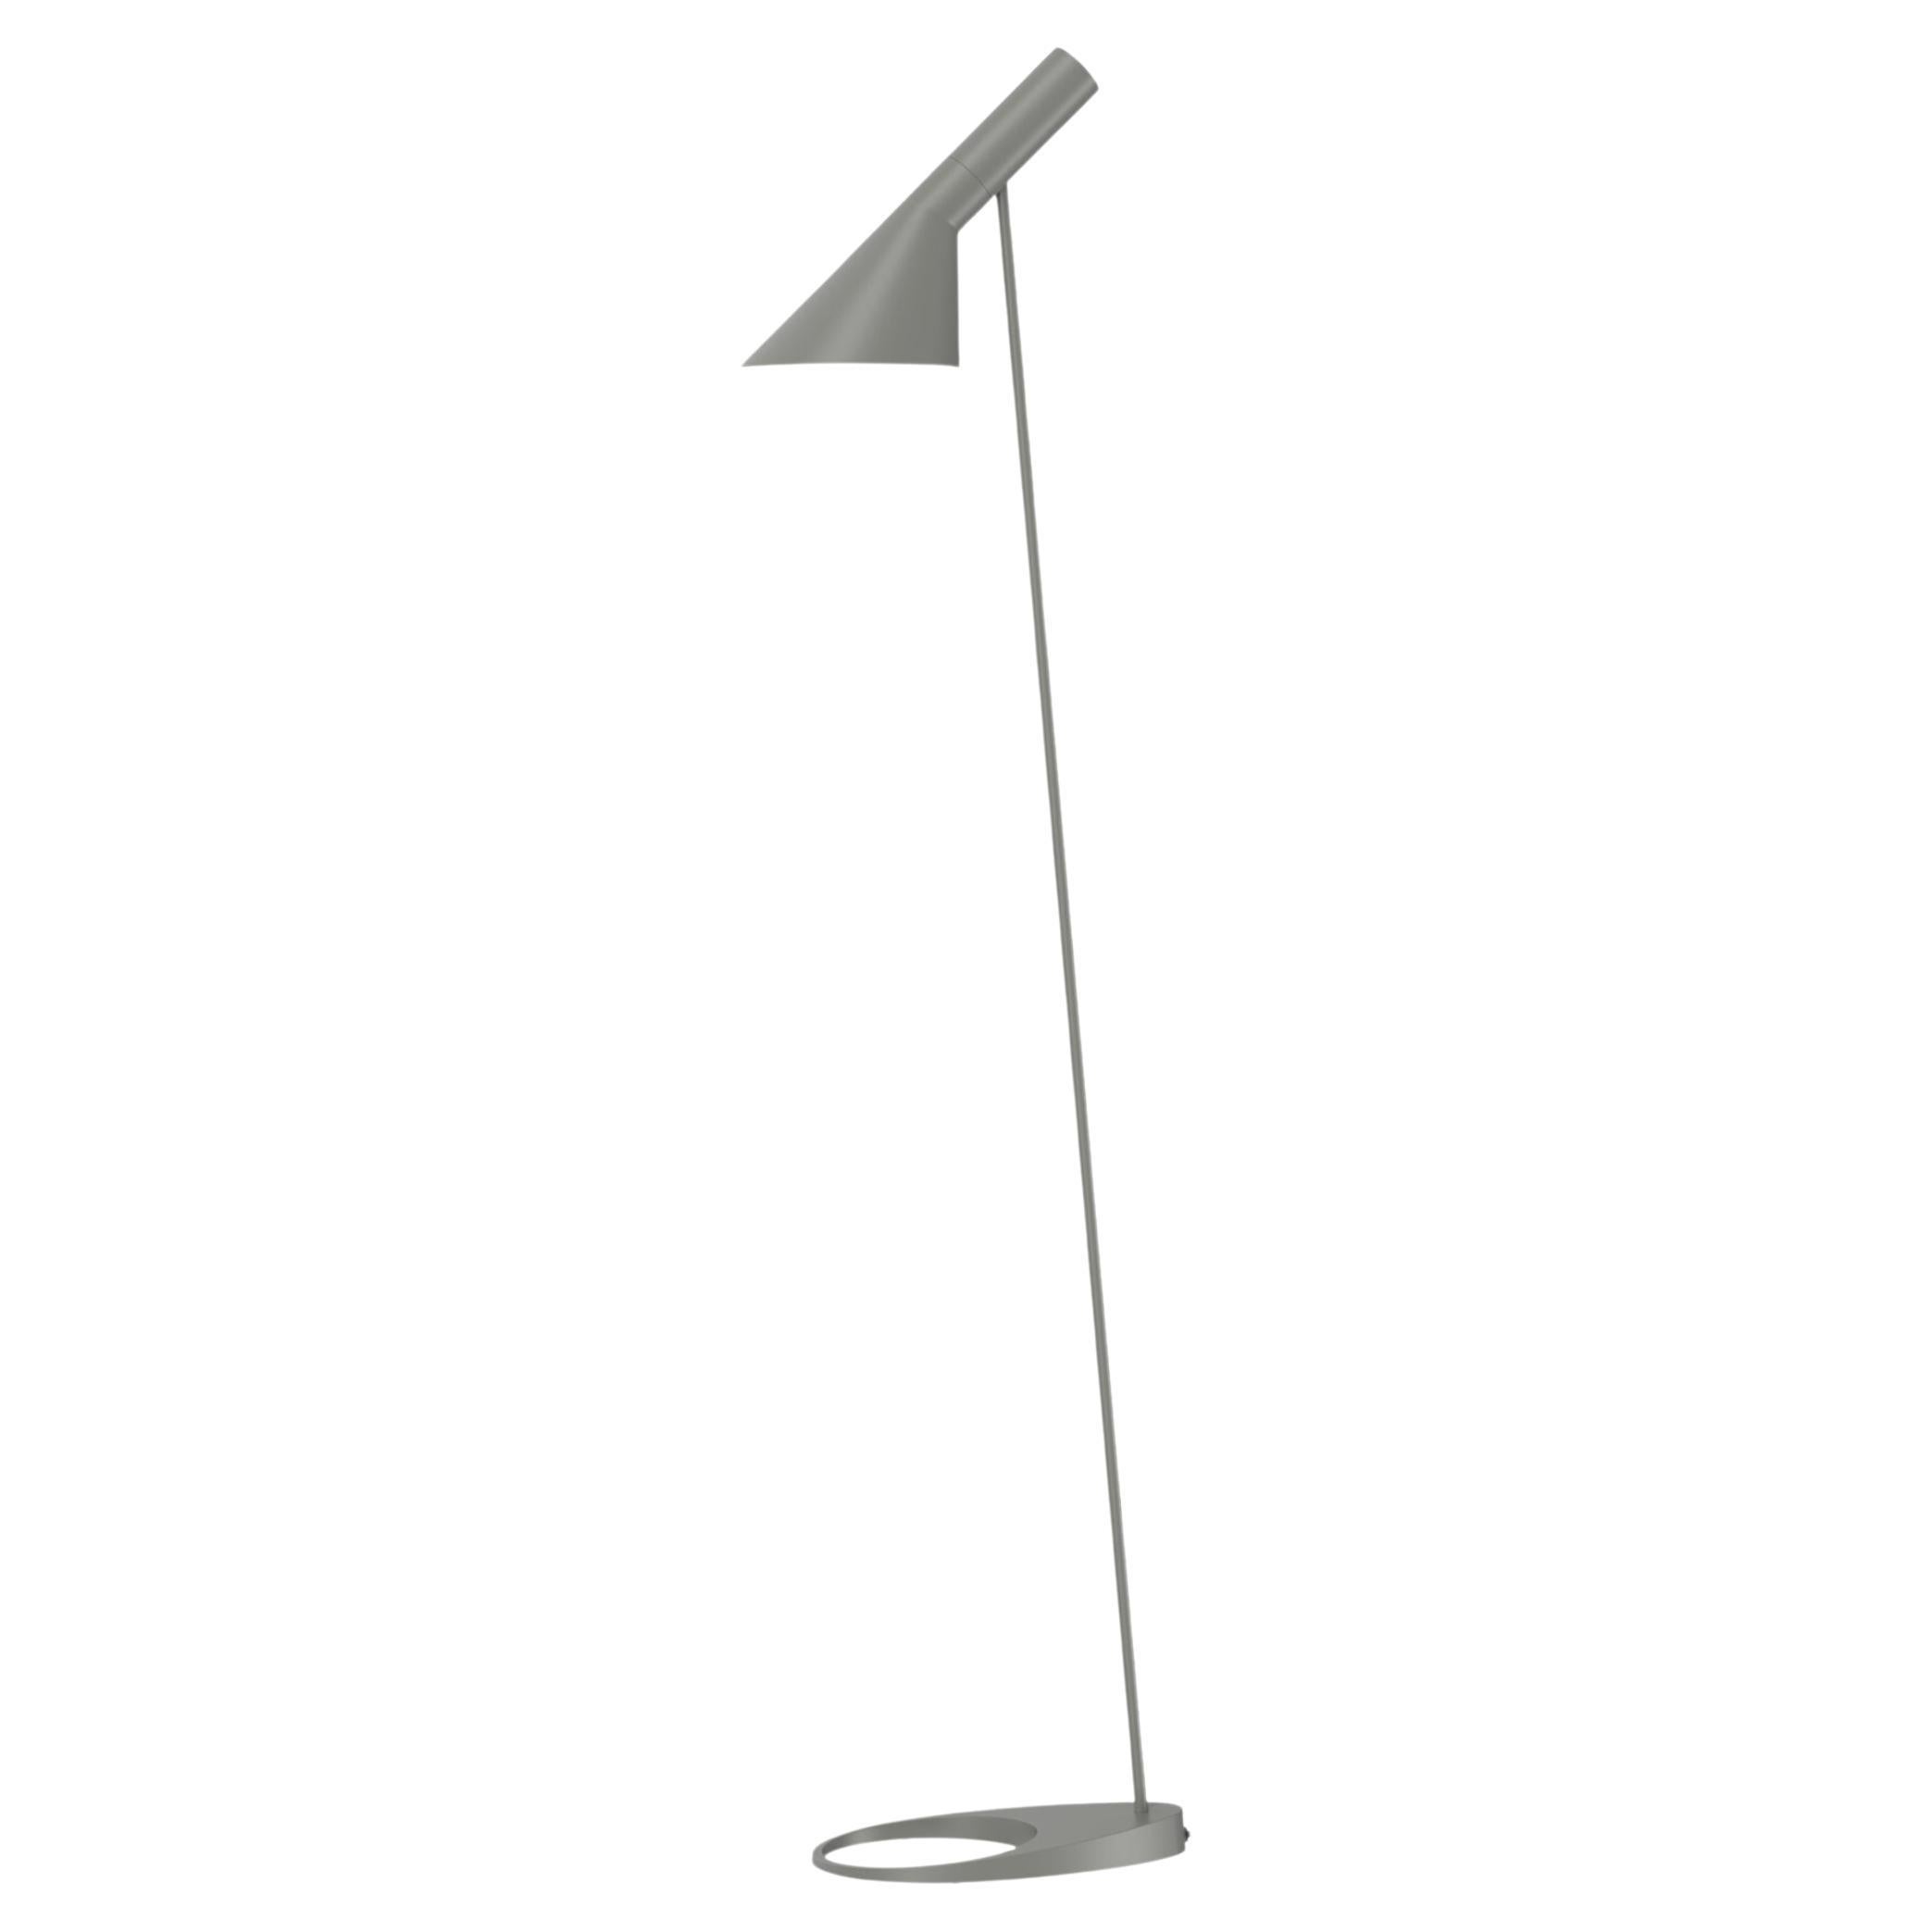 Arne Jacobsen AJ Floor Lamp in Warm Grey for Louis Poulsen For Sale